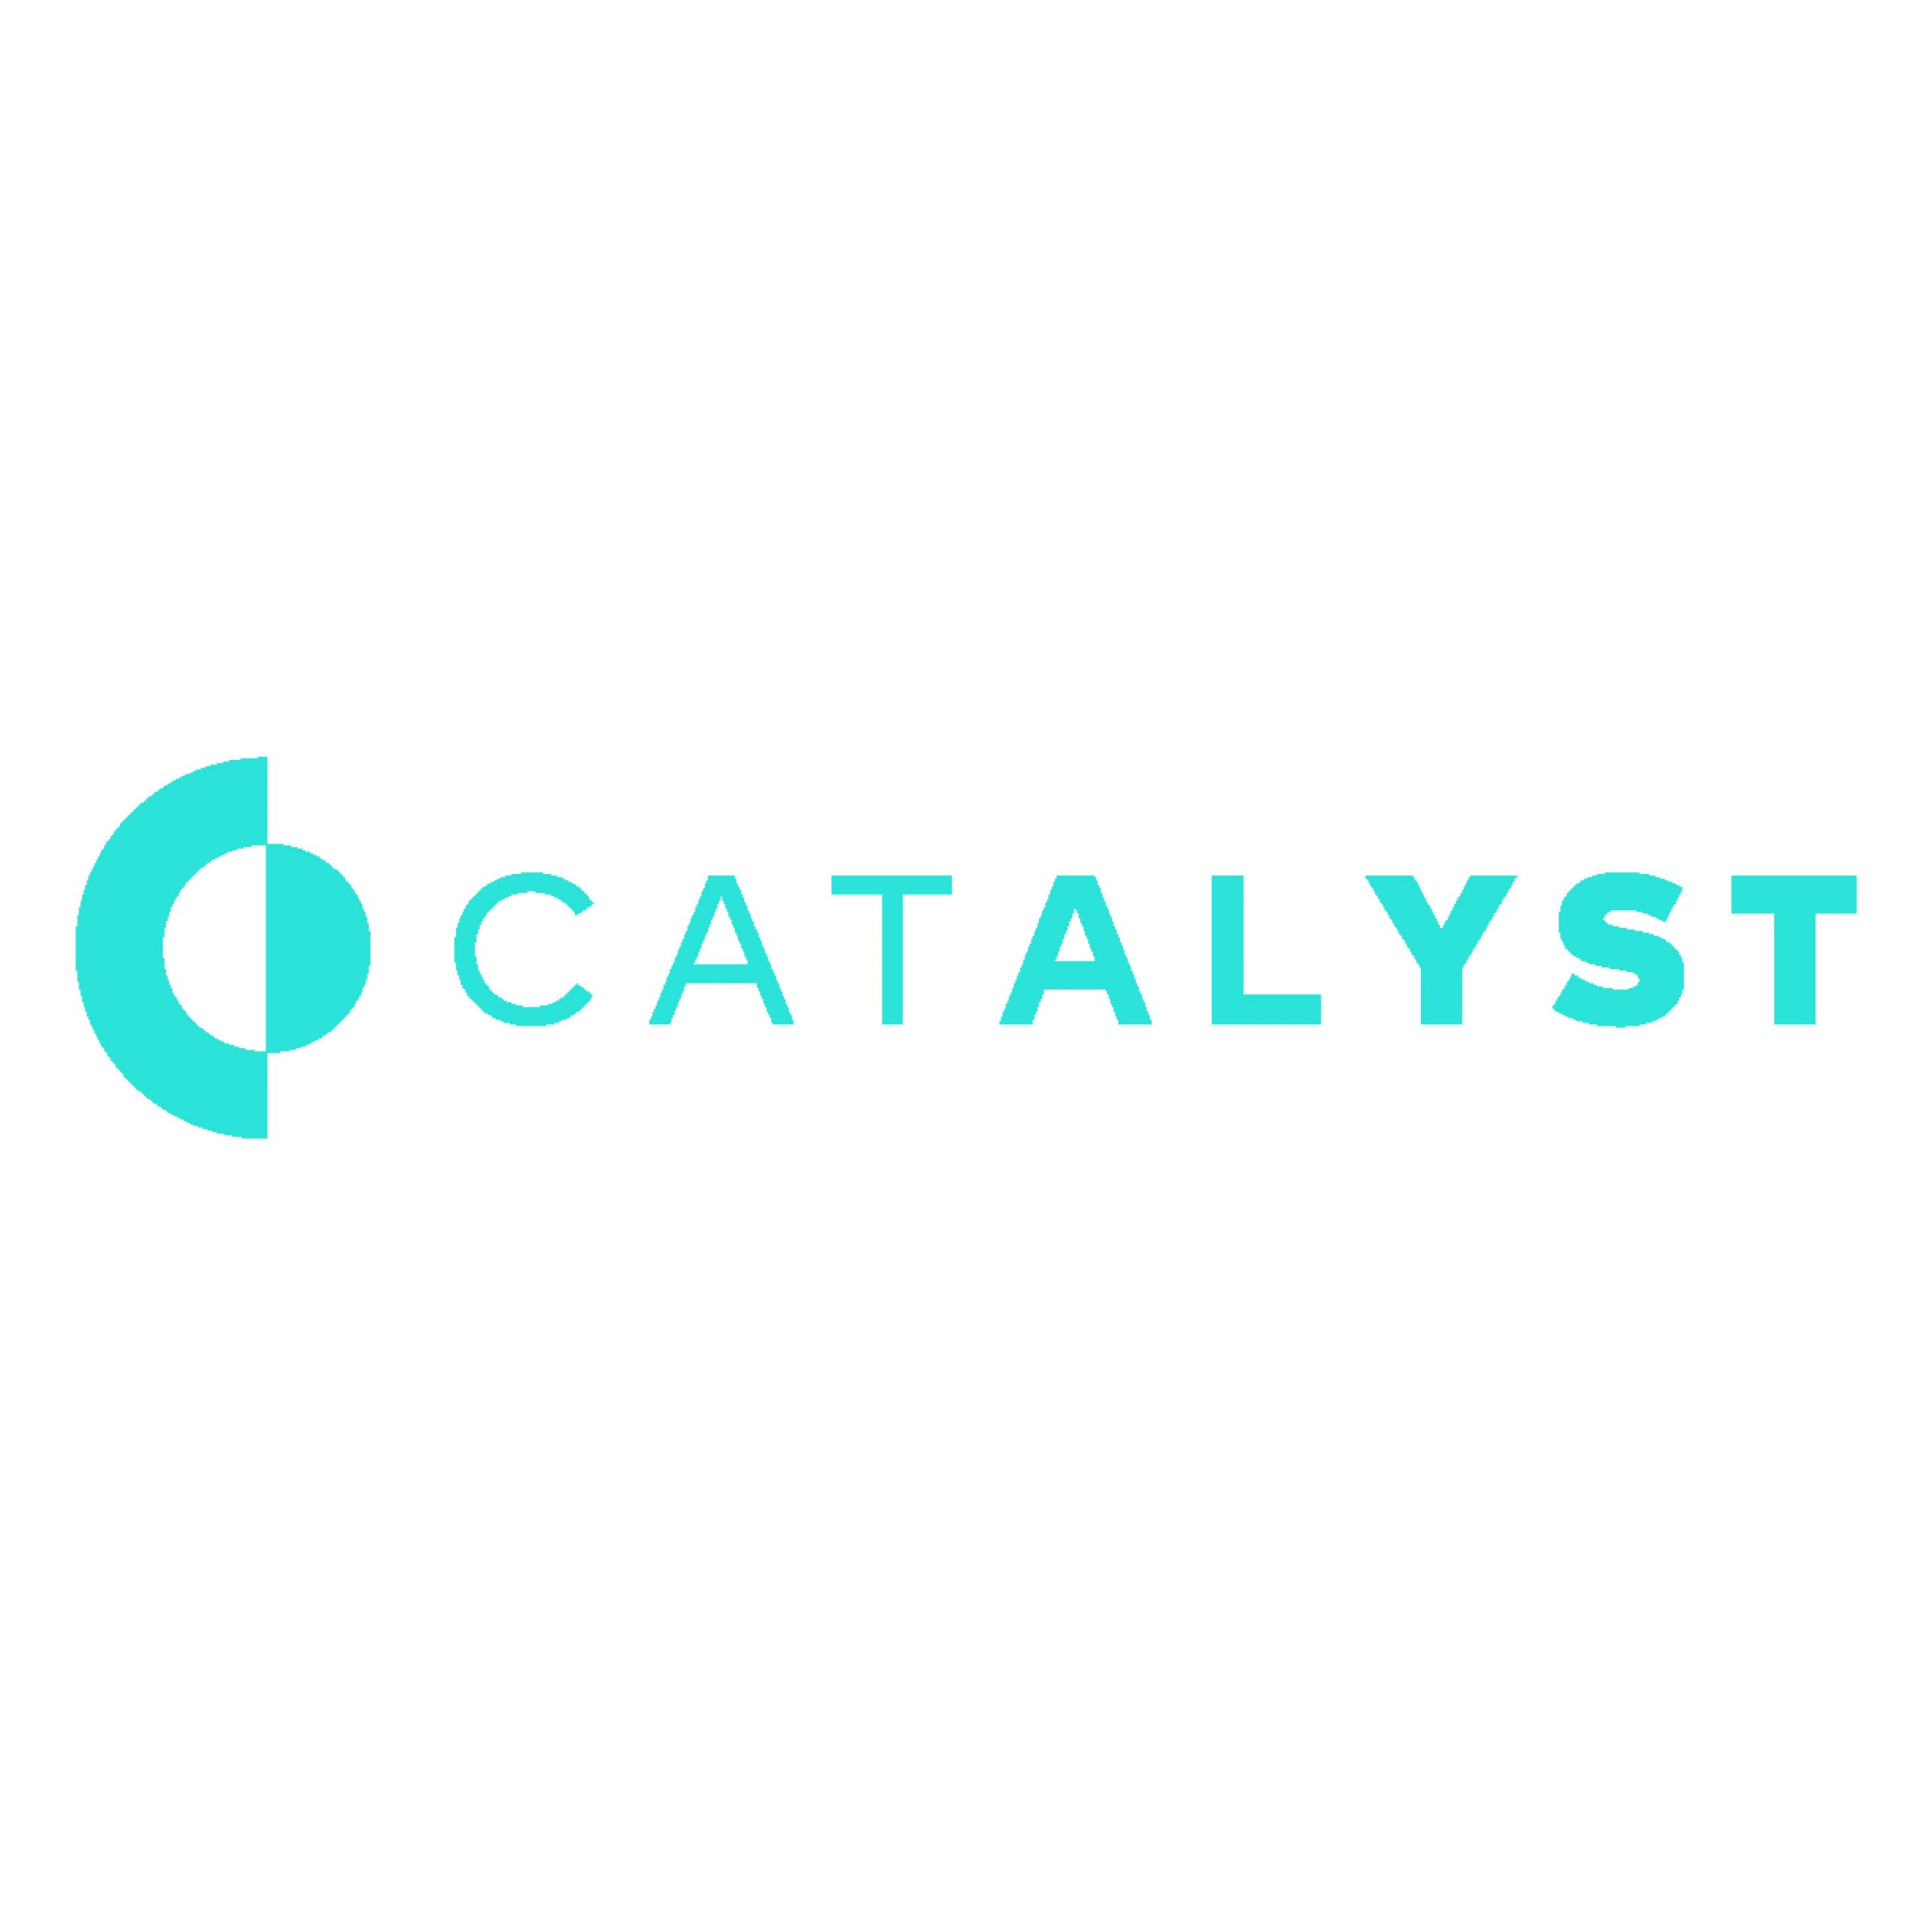 St Pete Catalyst Logo 4